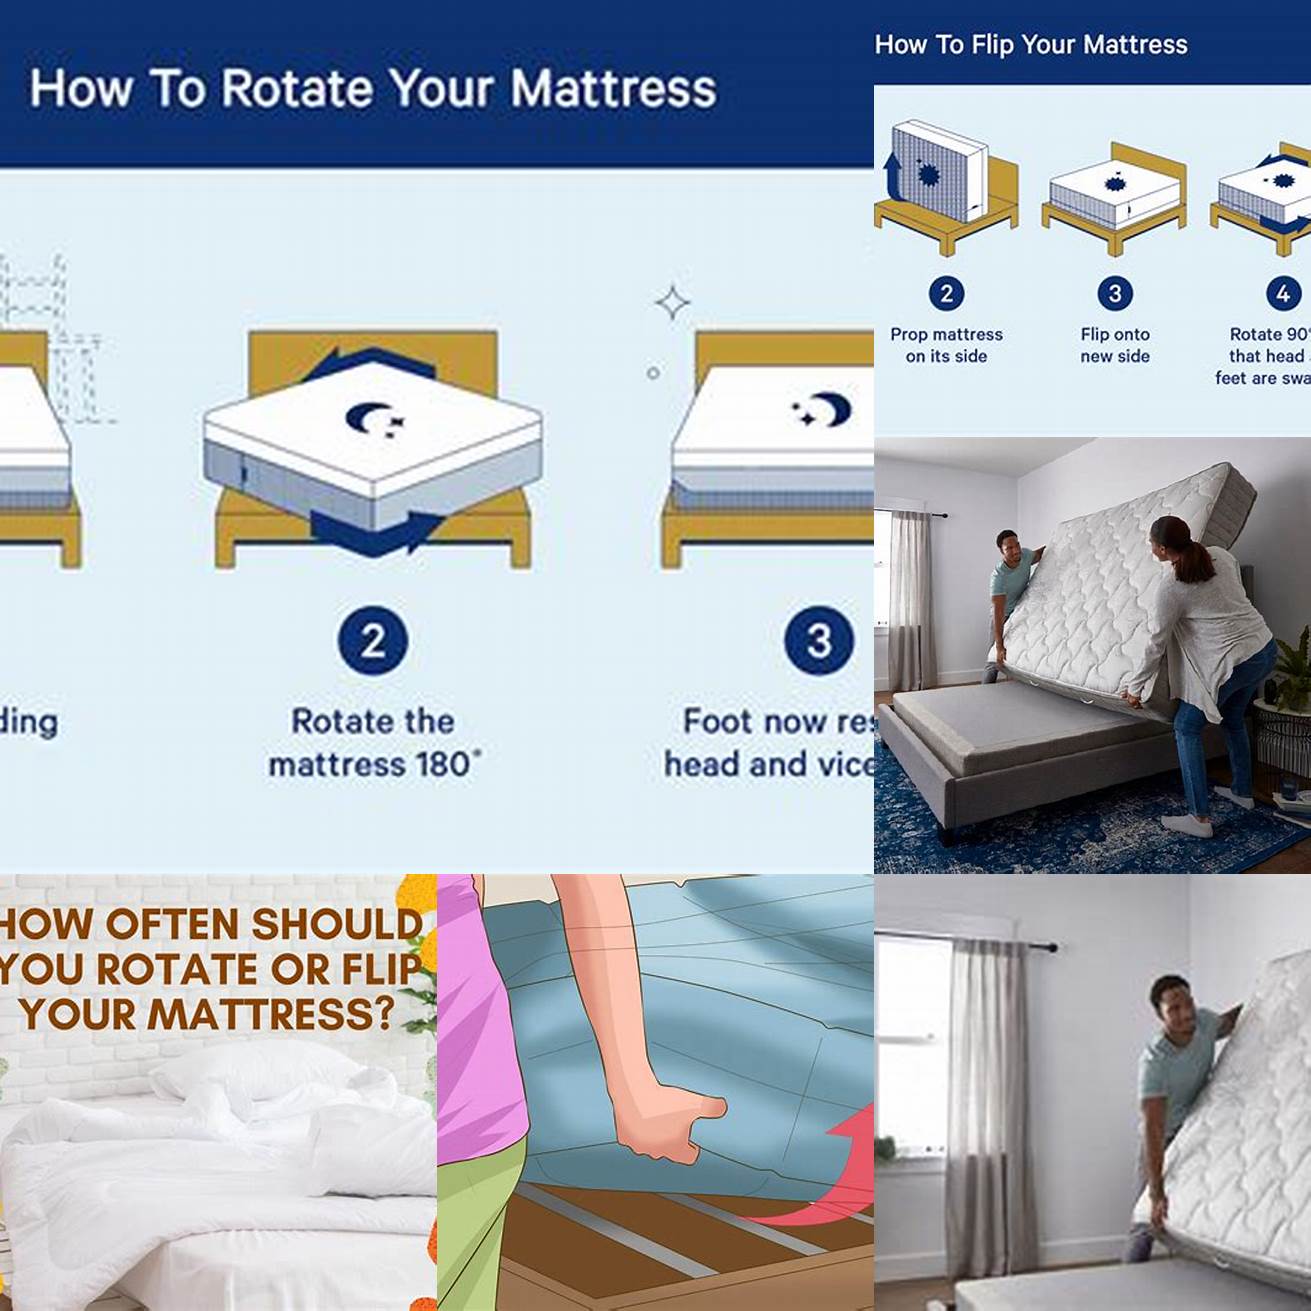 Rotate mattresses regularly